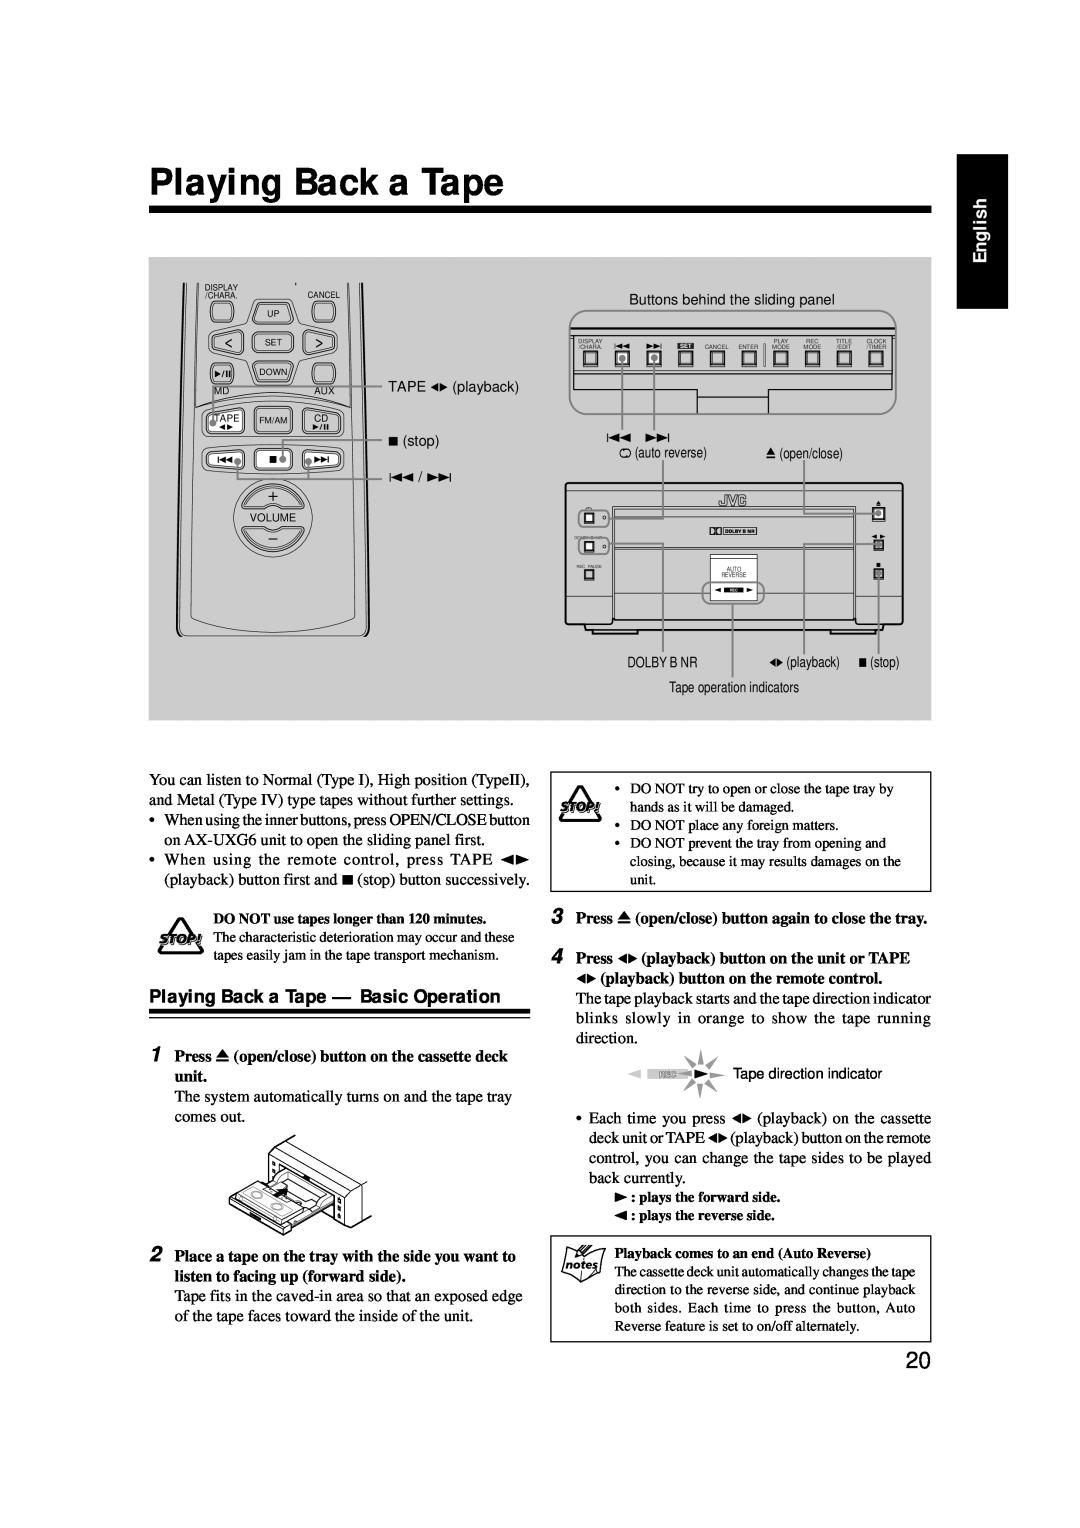 JVC FS-G6, LVT0375-001A, XT-UXG6 manual Playing Back a Tape - Basic Operation, English 